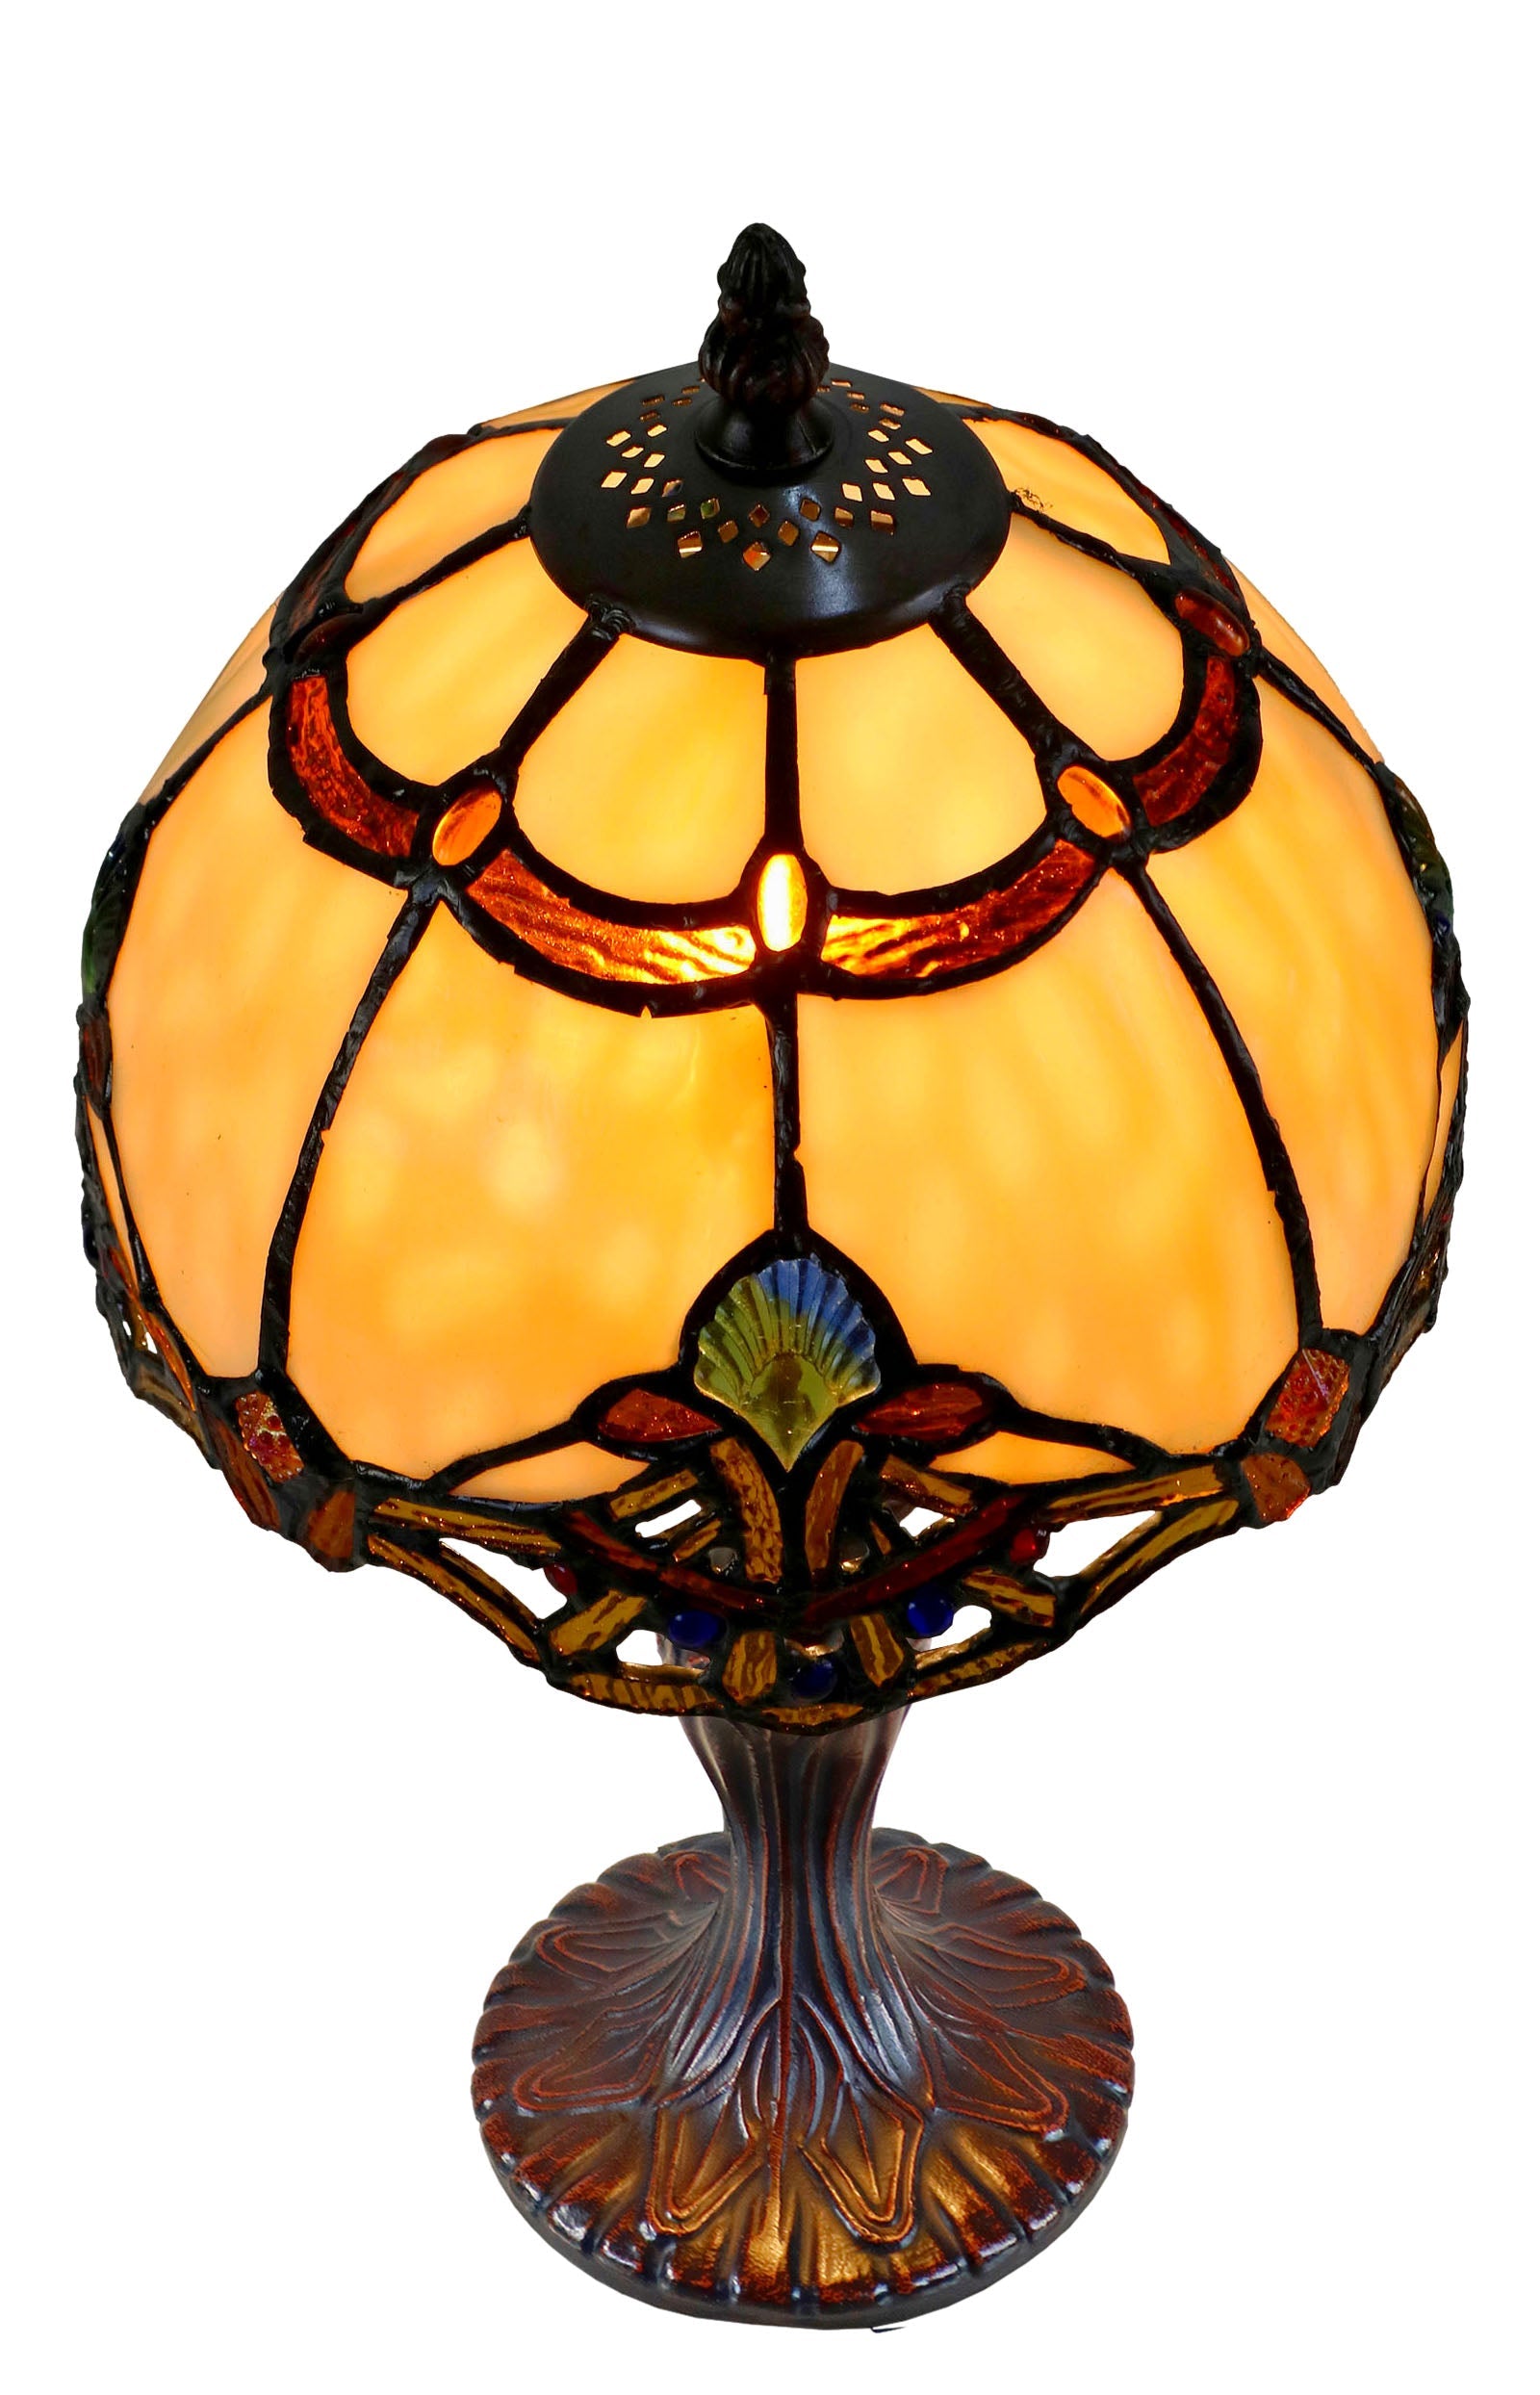 Elegant 8" Beige  Baroque Style Tiffany Mini Lamp